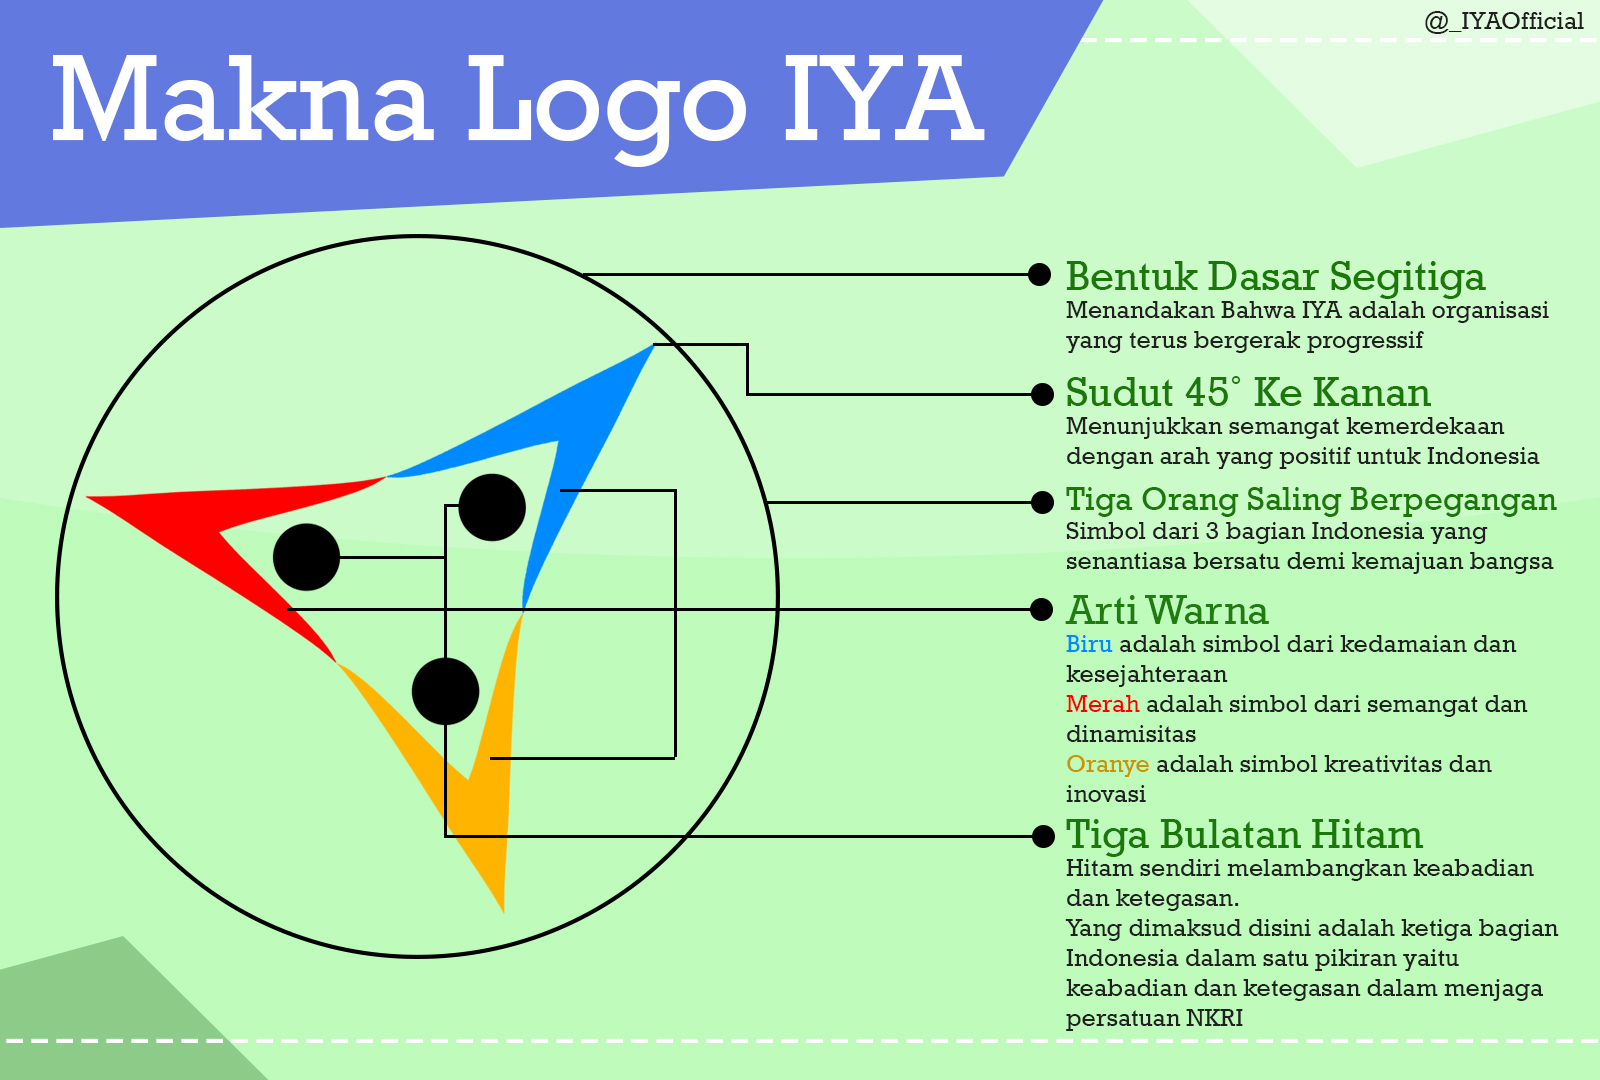 Makna Logo dari Indonesian Youth Ambassador IYA 